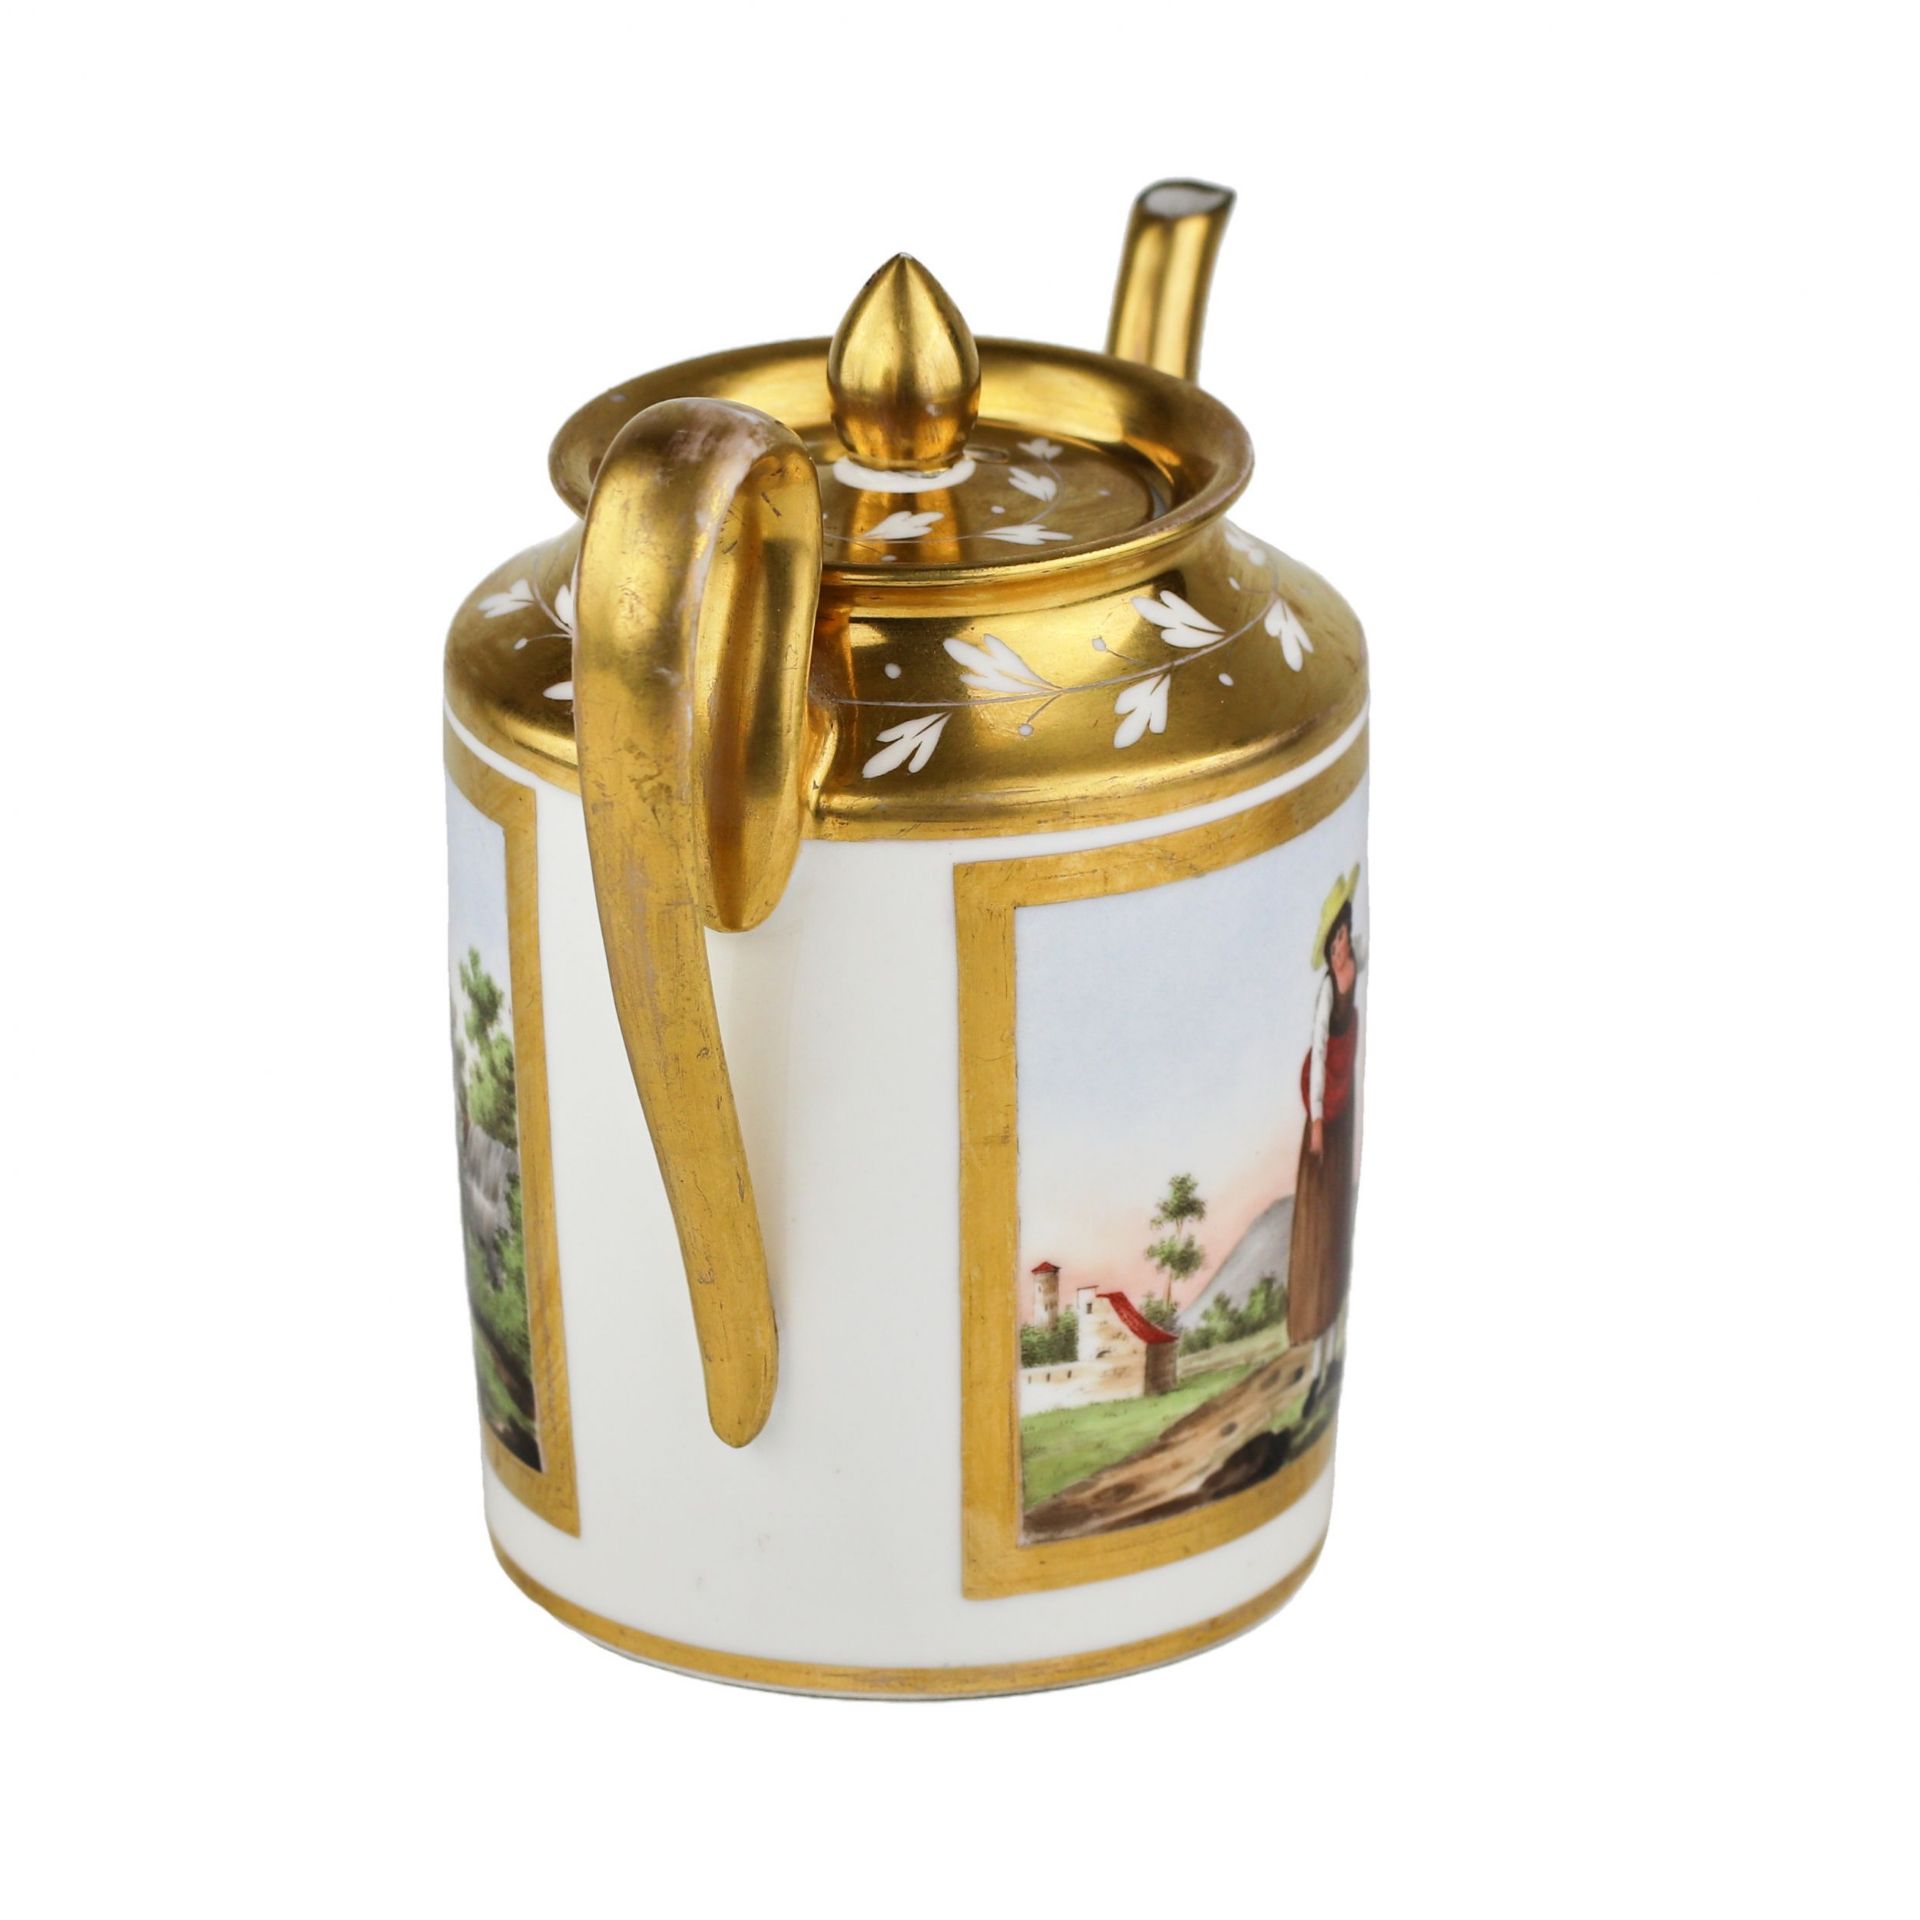 Gardner porcelain teapot. Russia, 1820-1830s - Image 5 of 7